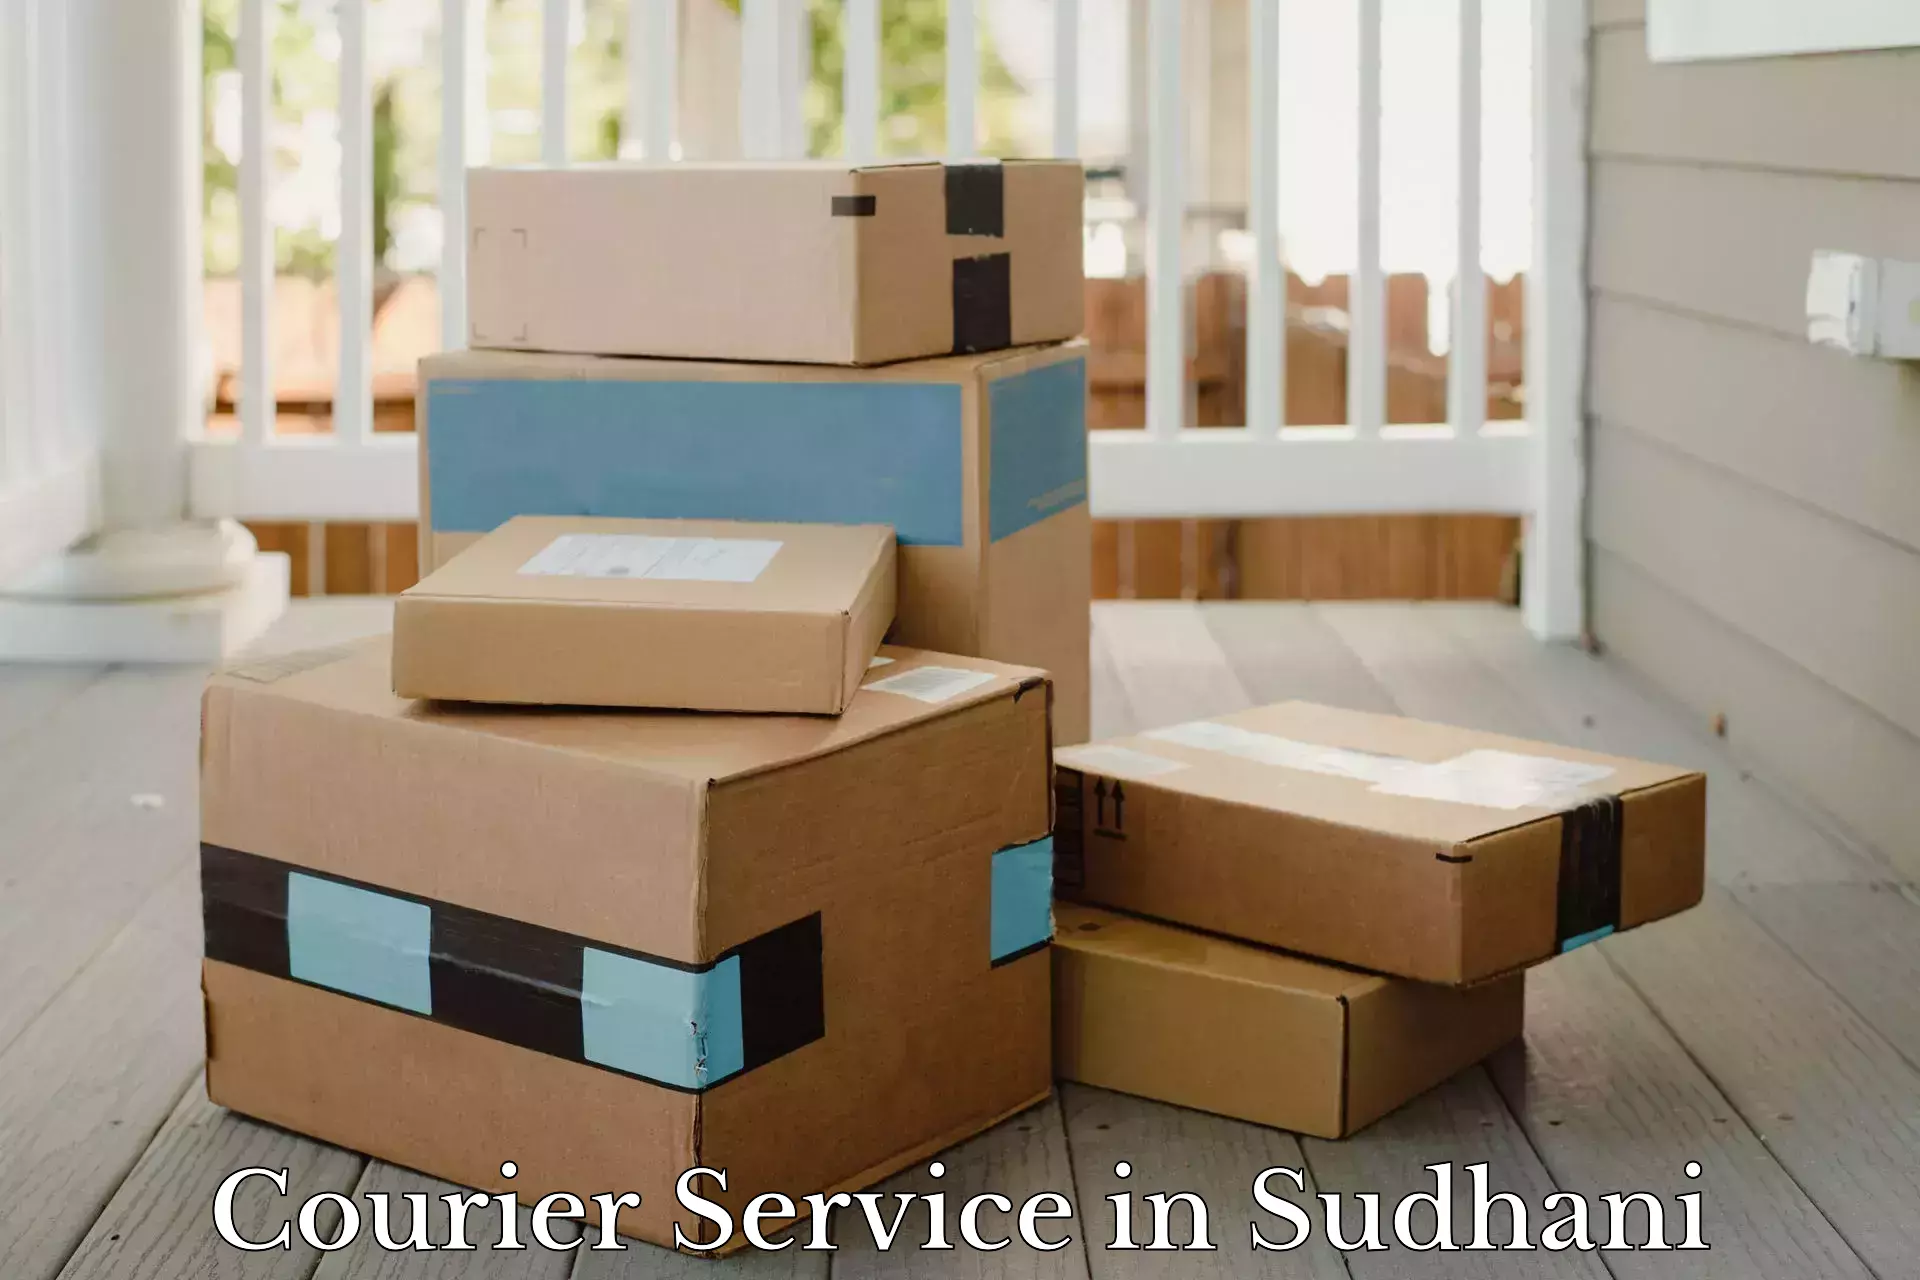 Reliable logistics providers in Sudhani